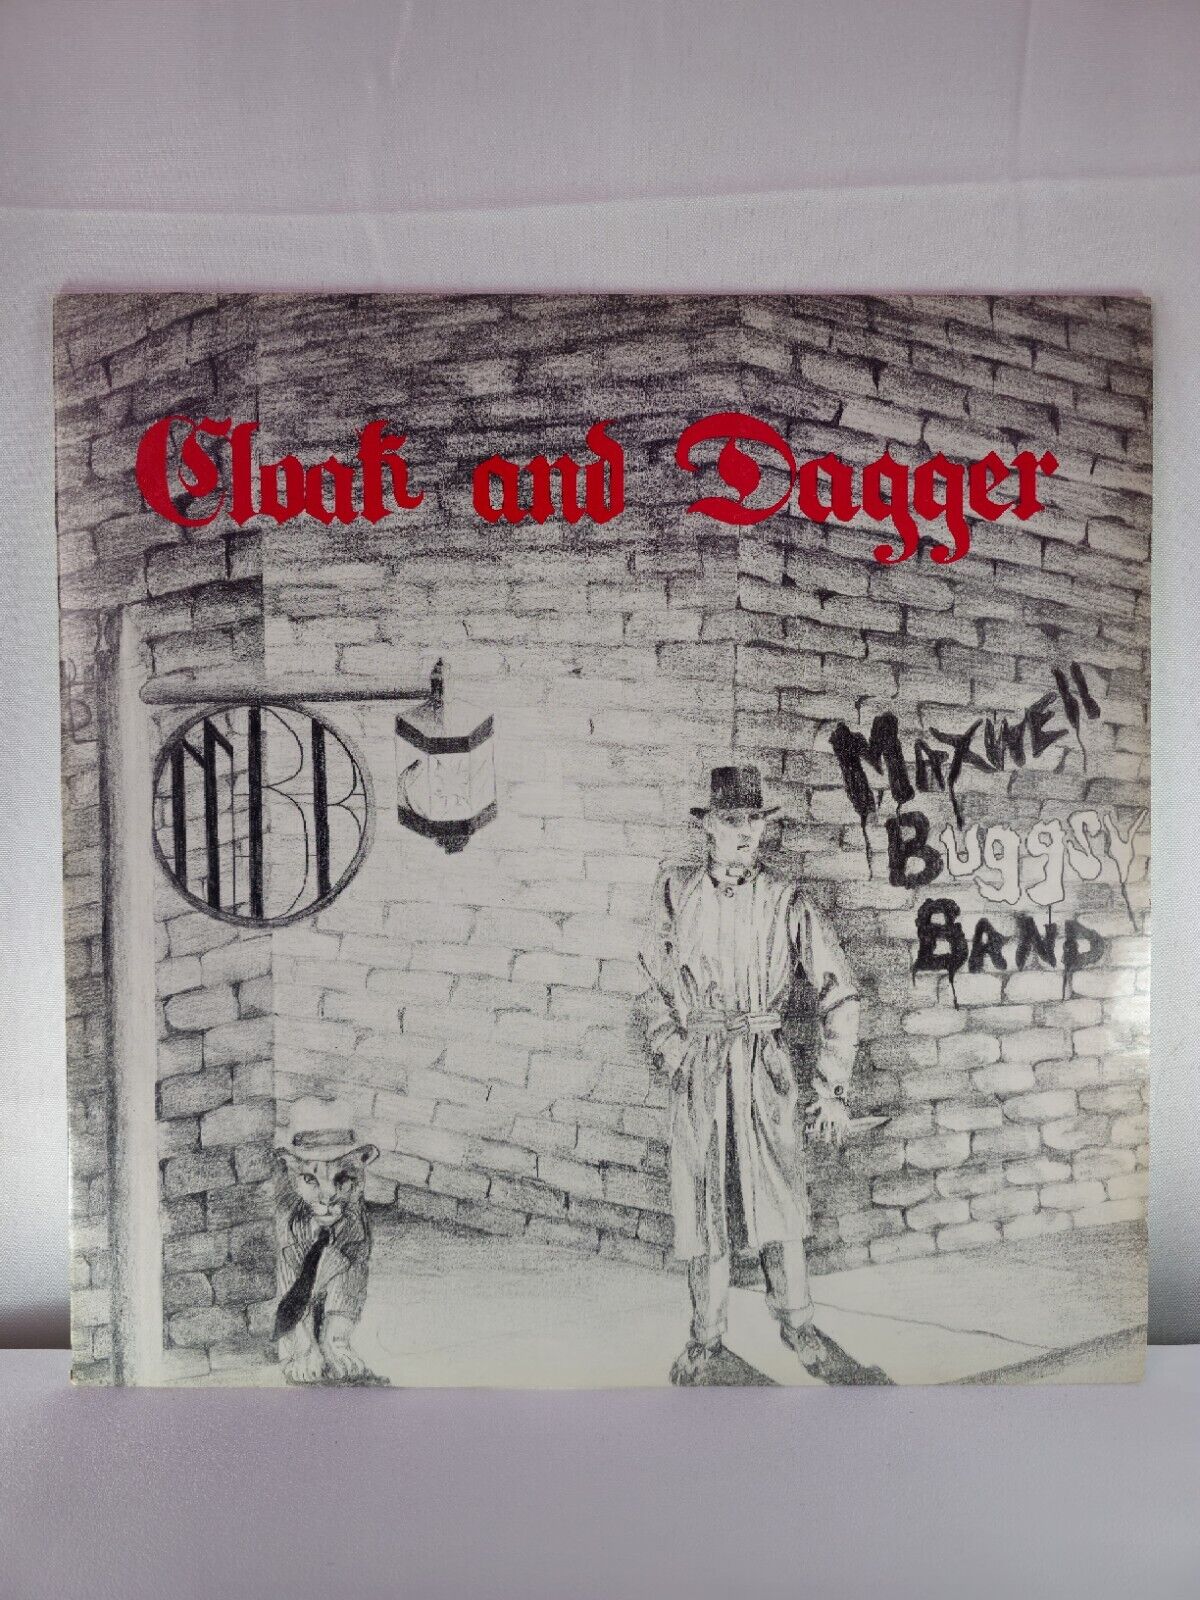 Maxwell Buggsy Band: Cloak and Dagger [LP] 1983 Vinyl Record Rare Hard Rock